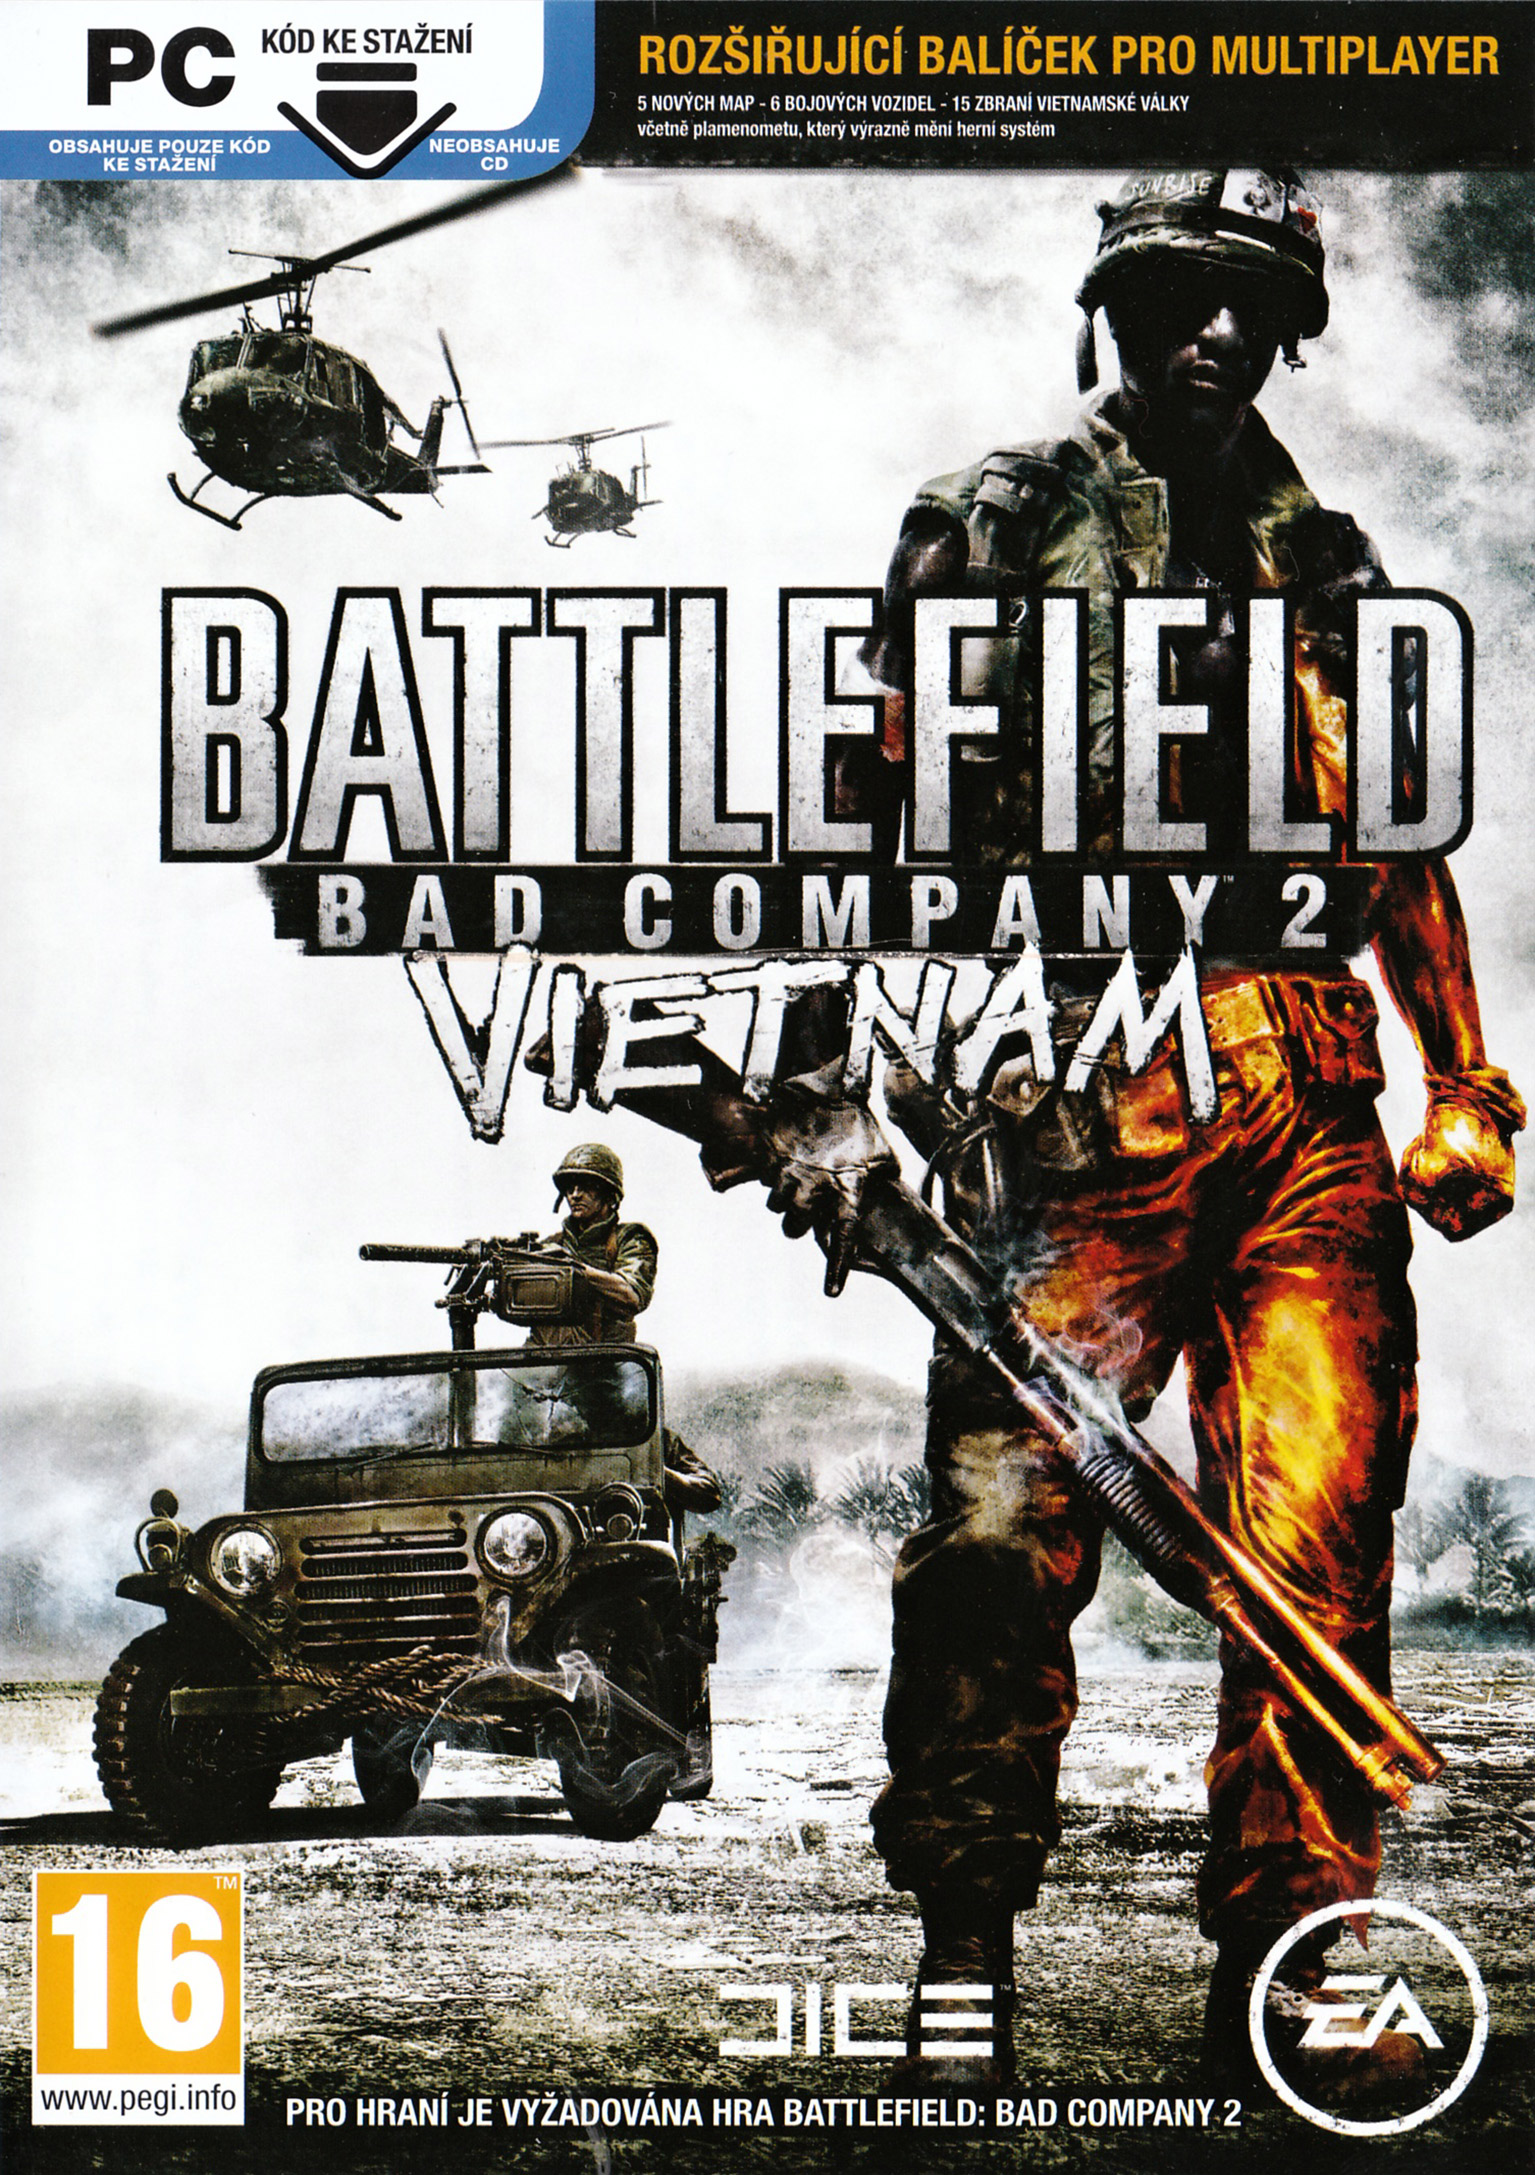 Battlefield: Bad Company 2 Vietnam - pedn DVD obal